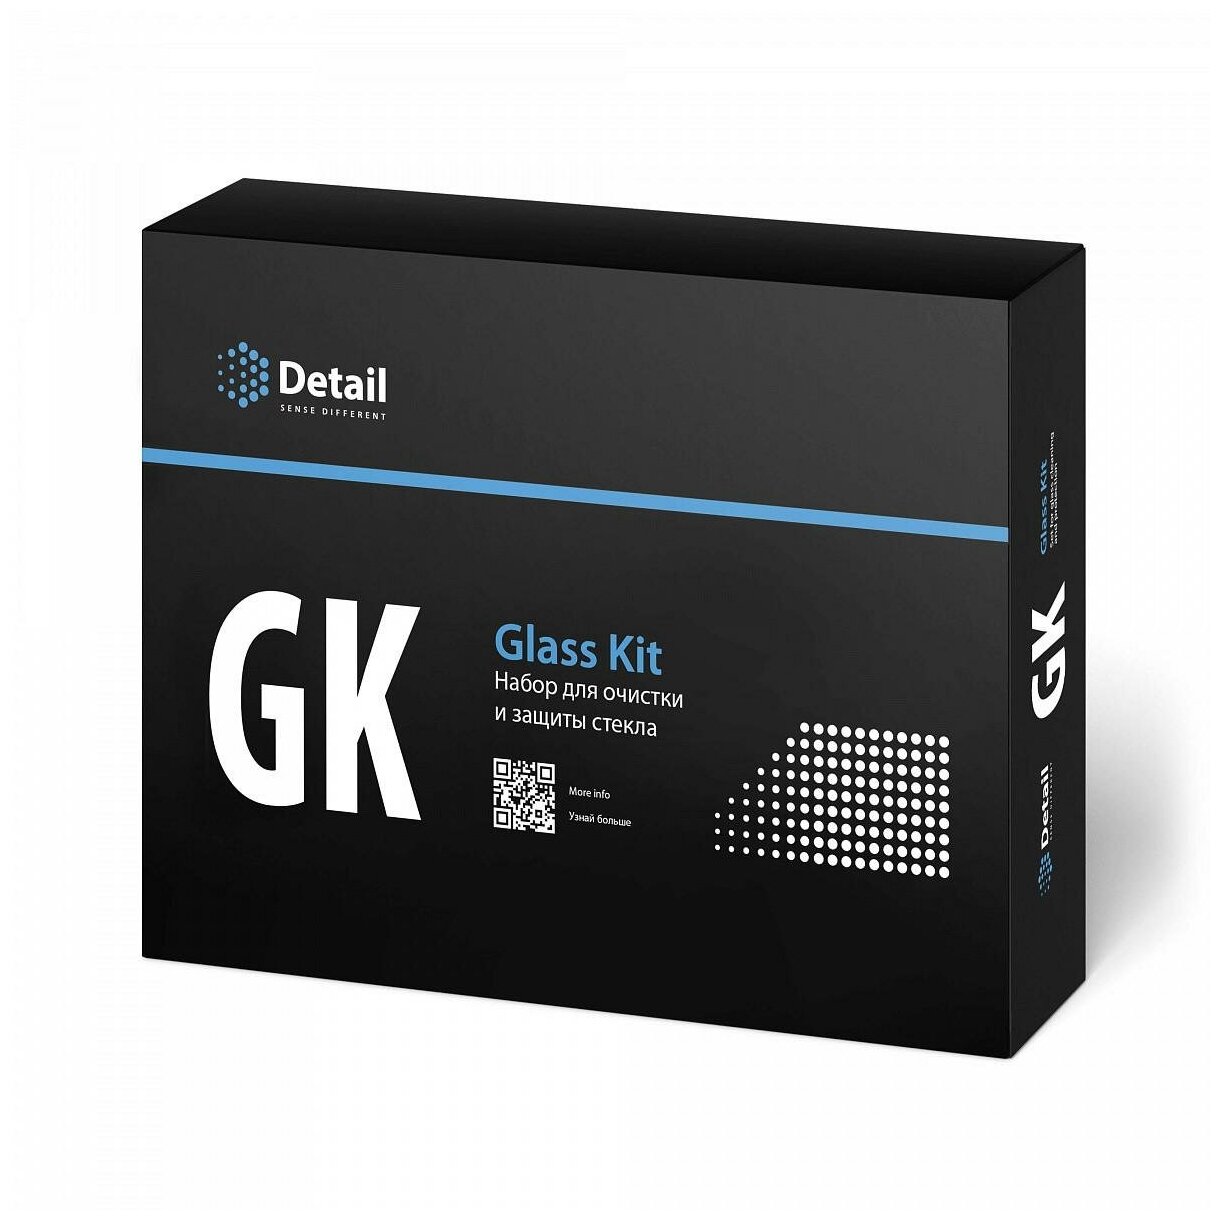 DETAIL GLASS KIT (GK) набор для очистки и защиты стекла